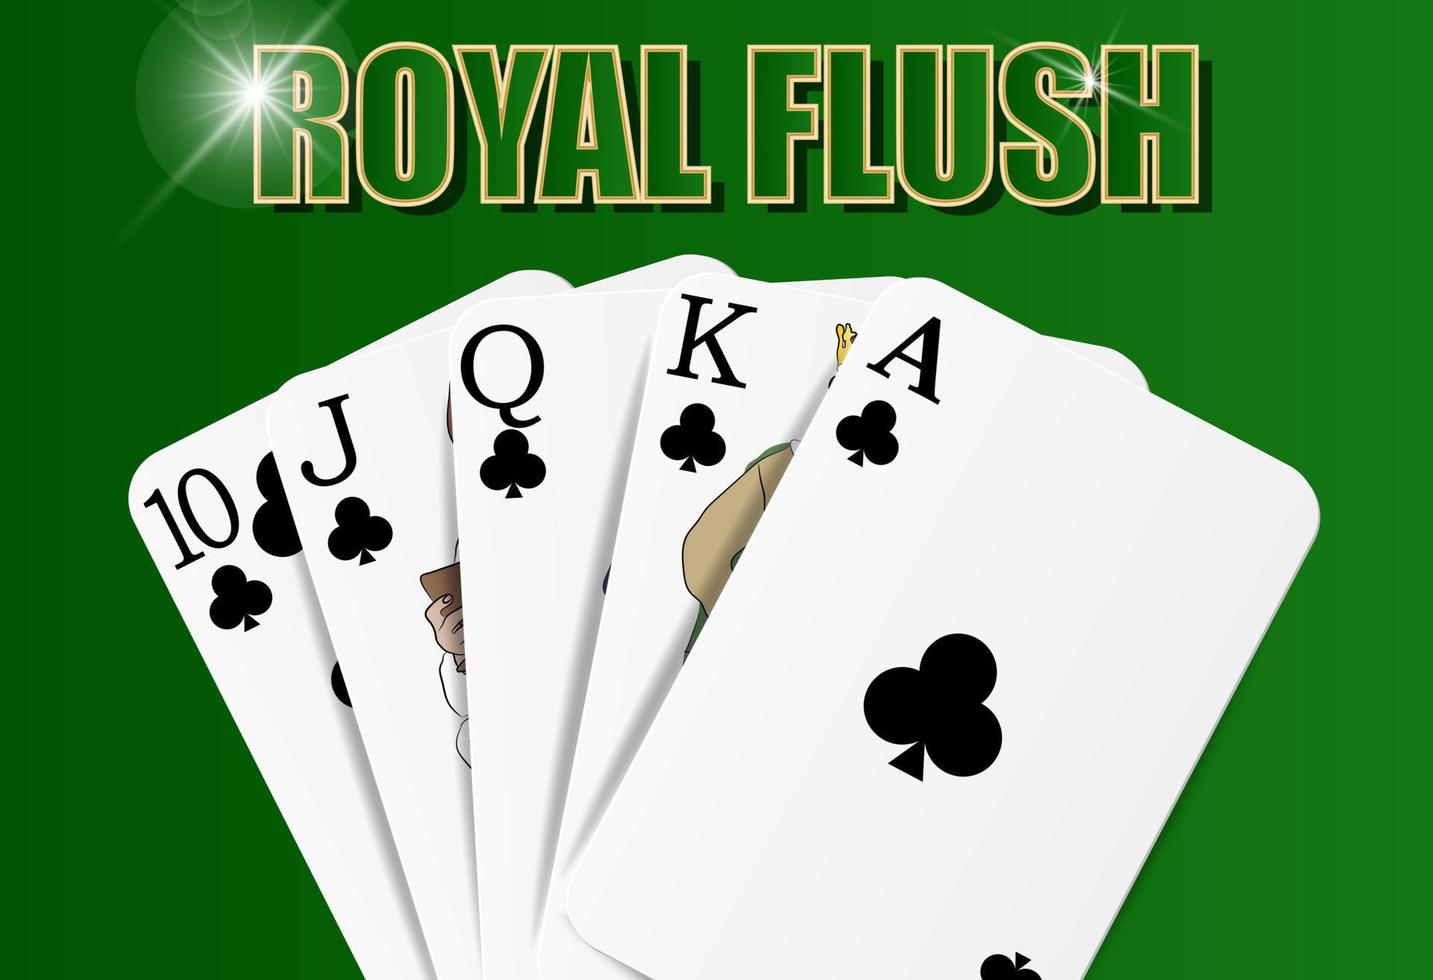 Clubs Royal flush vector